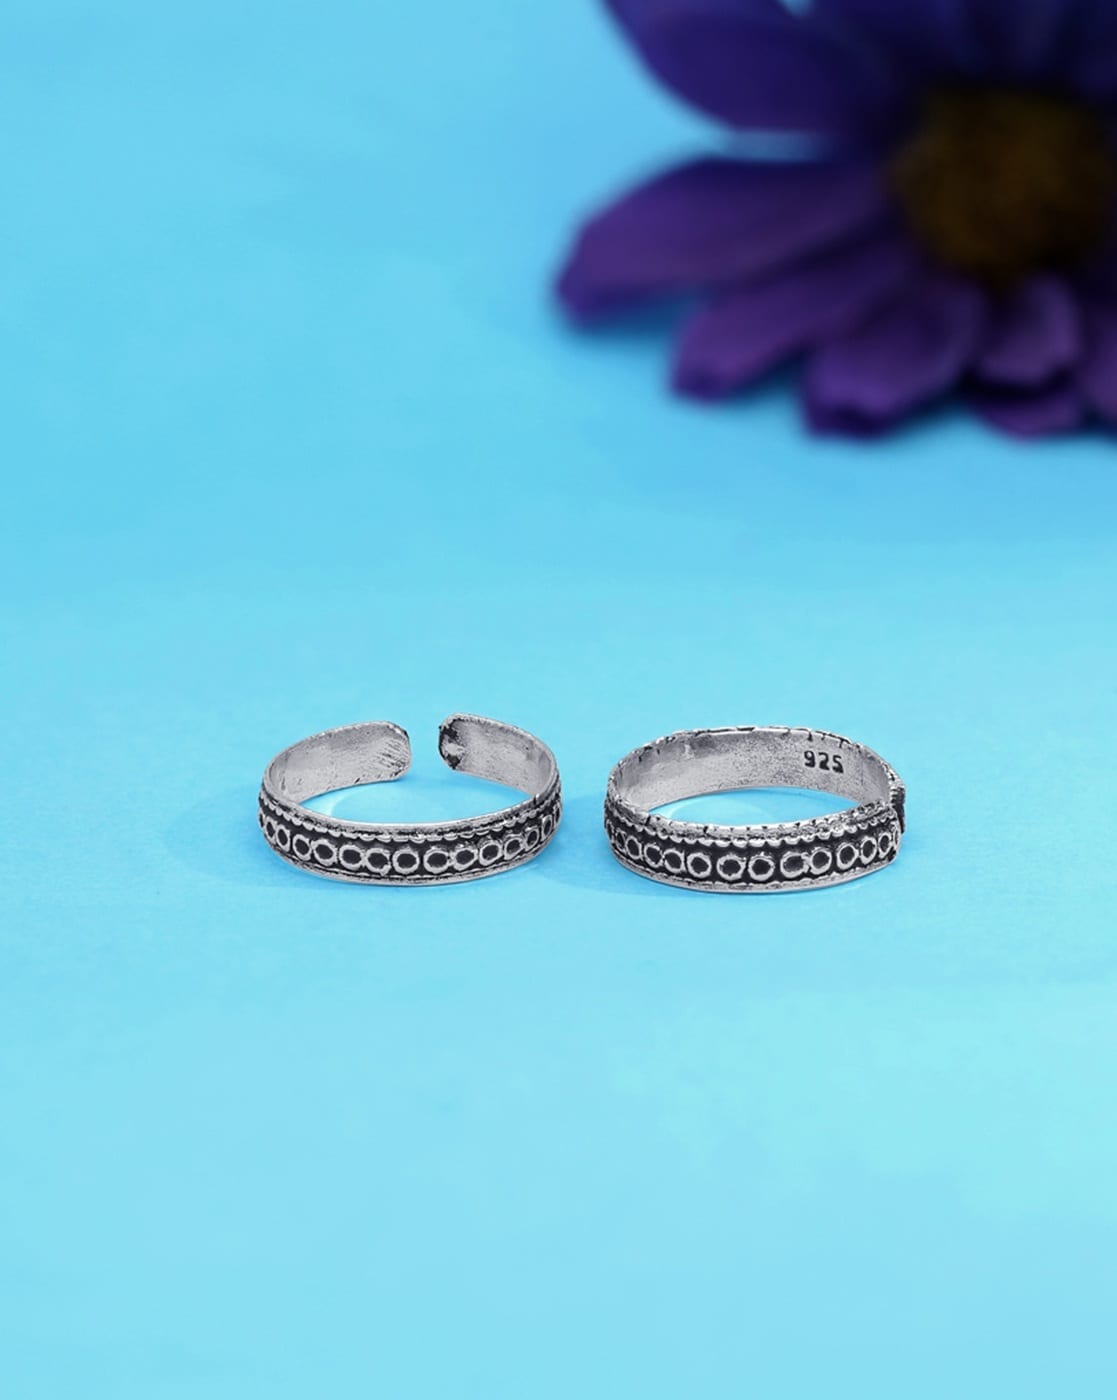 Silver Toe-Rings -Buy Pure Silver Toe rings Online — KO Jewellery